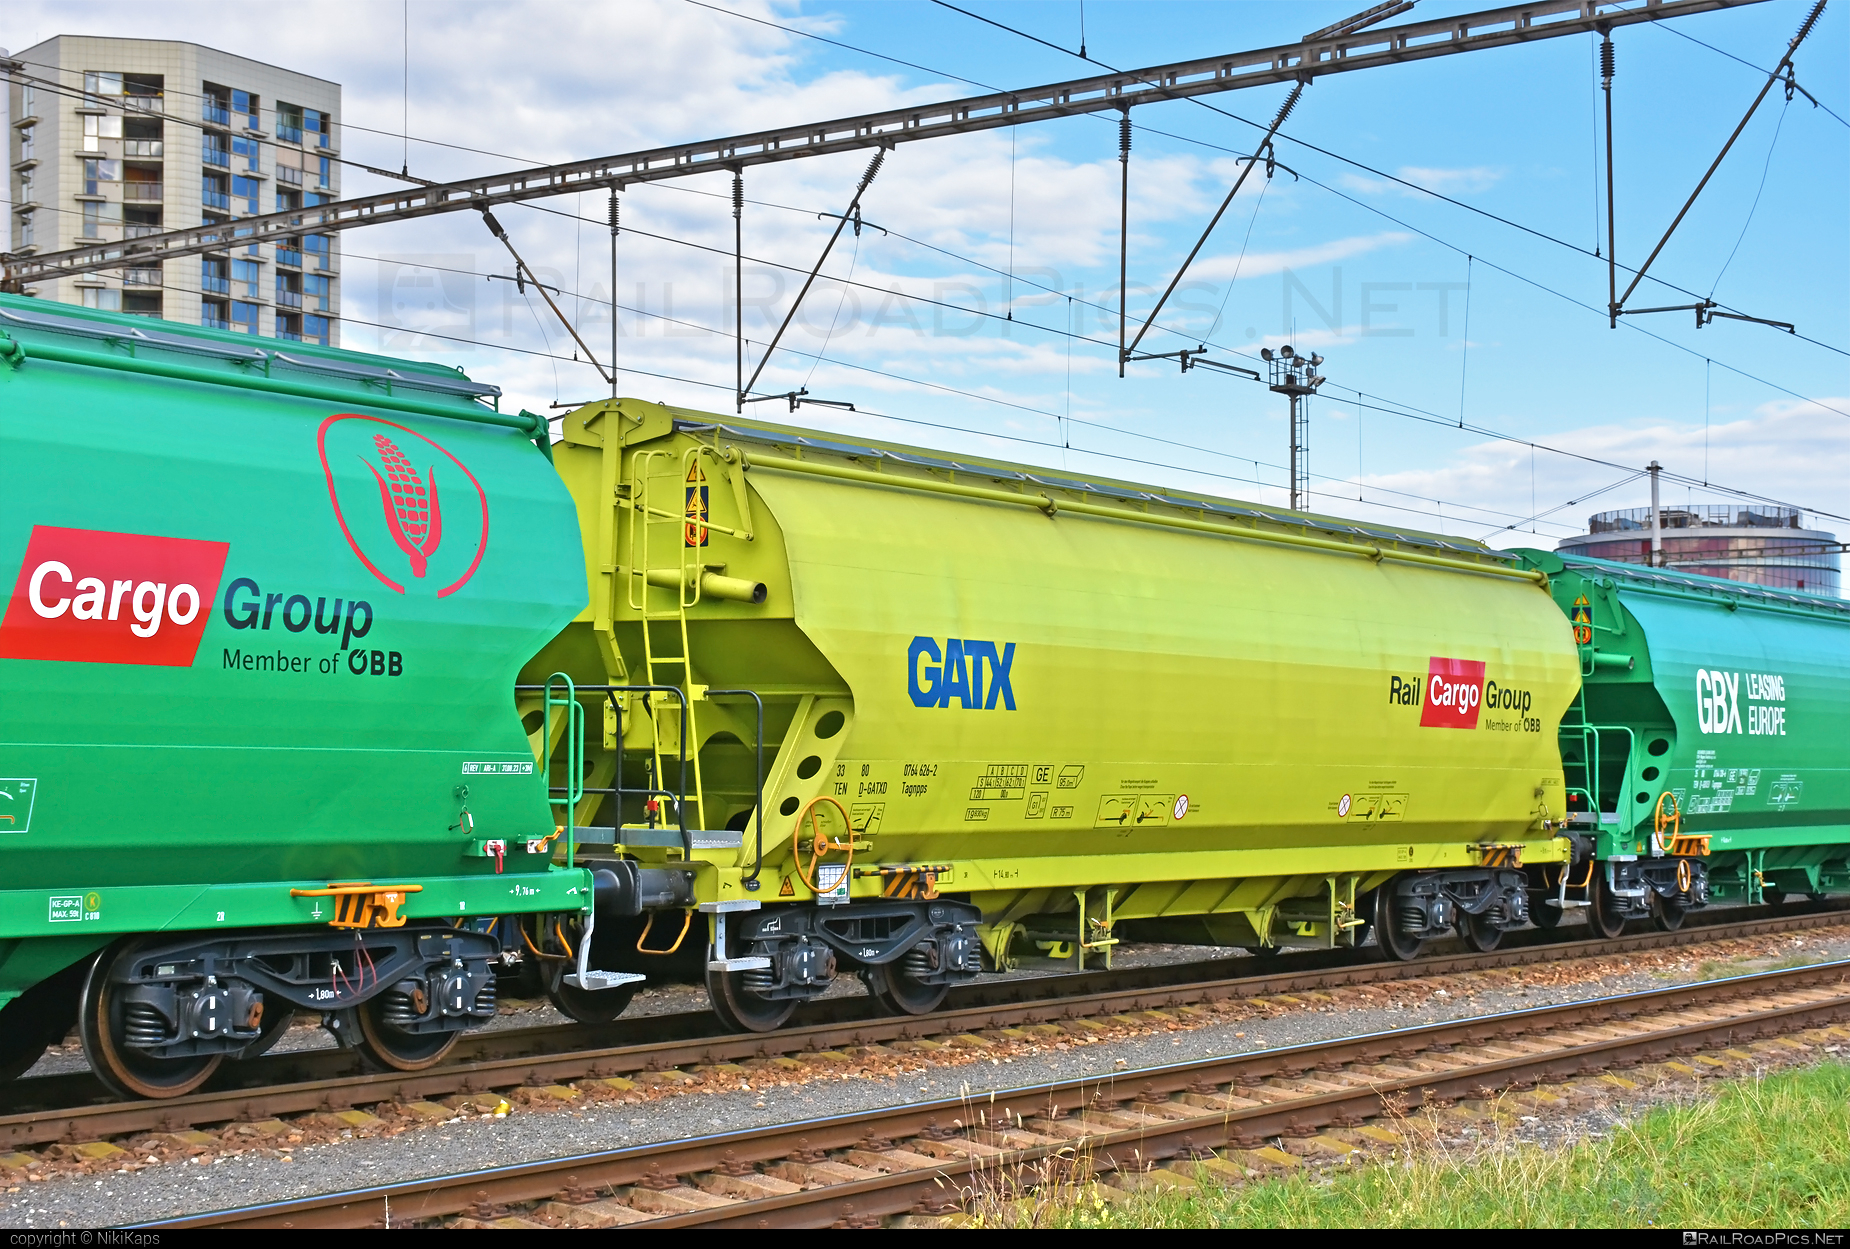 Class T - Tagnpps - 0764 626-2 operated by GATX Rail Germany GmbH #gatx #hopperwagon #railcargogroup #tagnpps